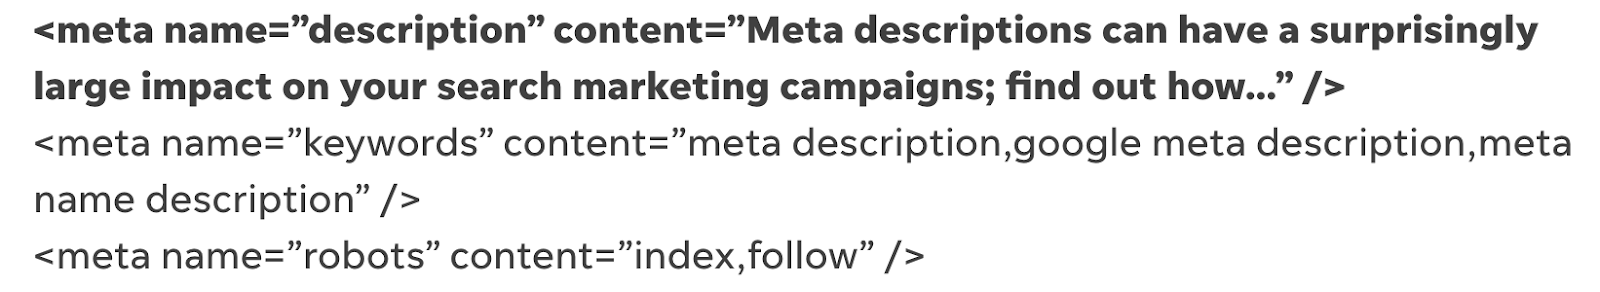 exemple de méta description en HTML